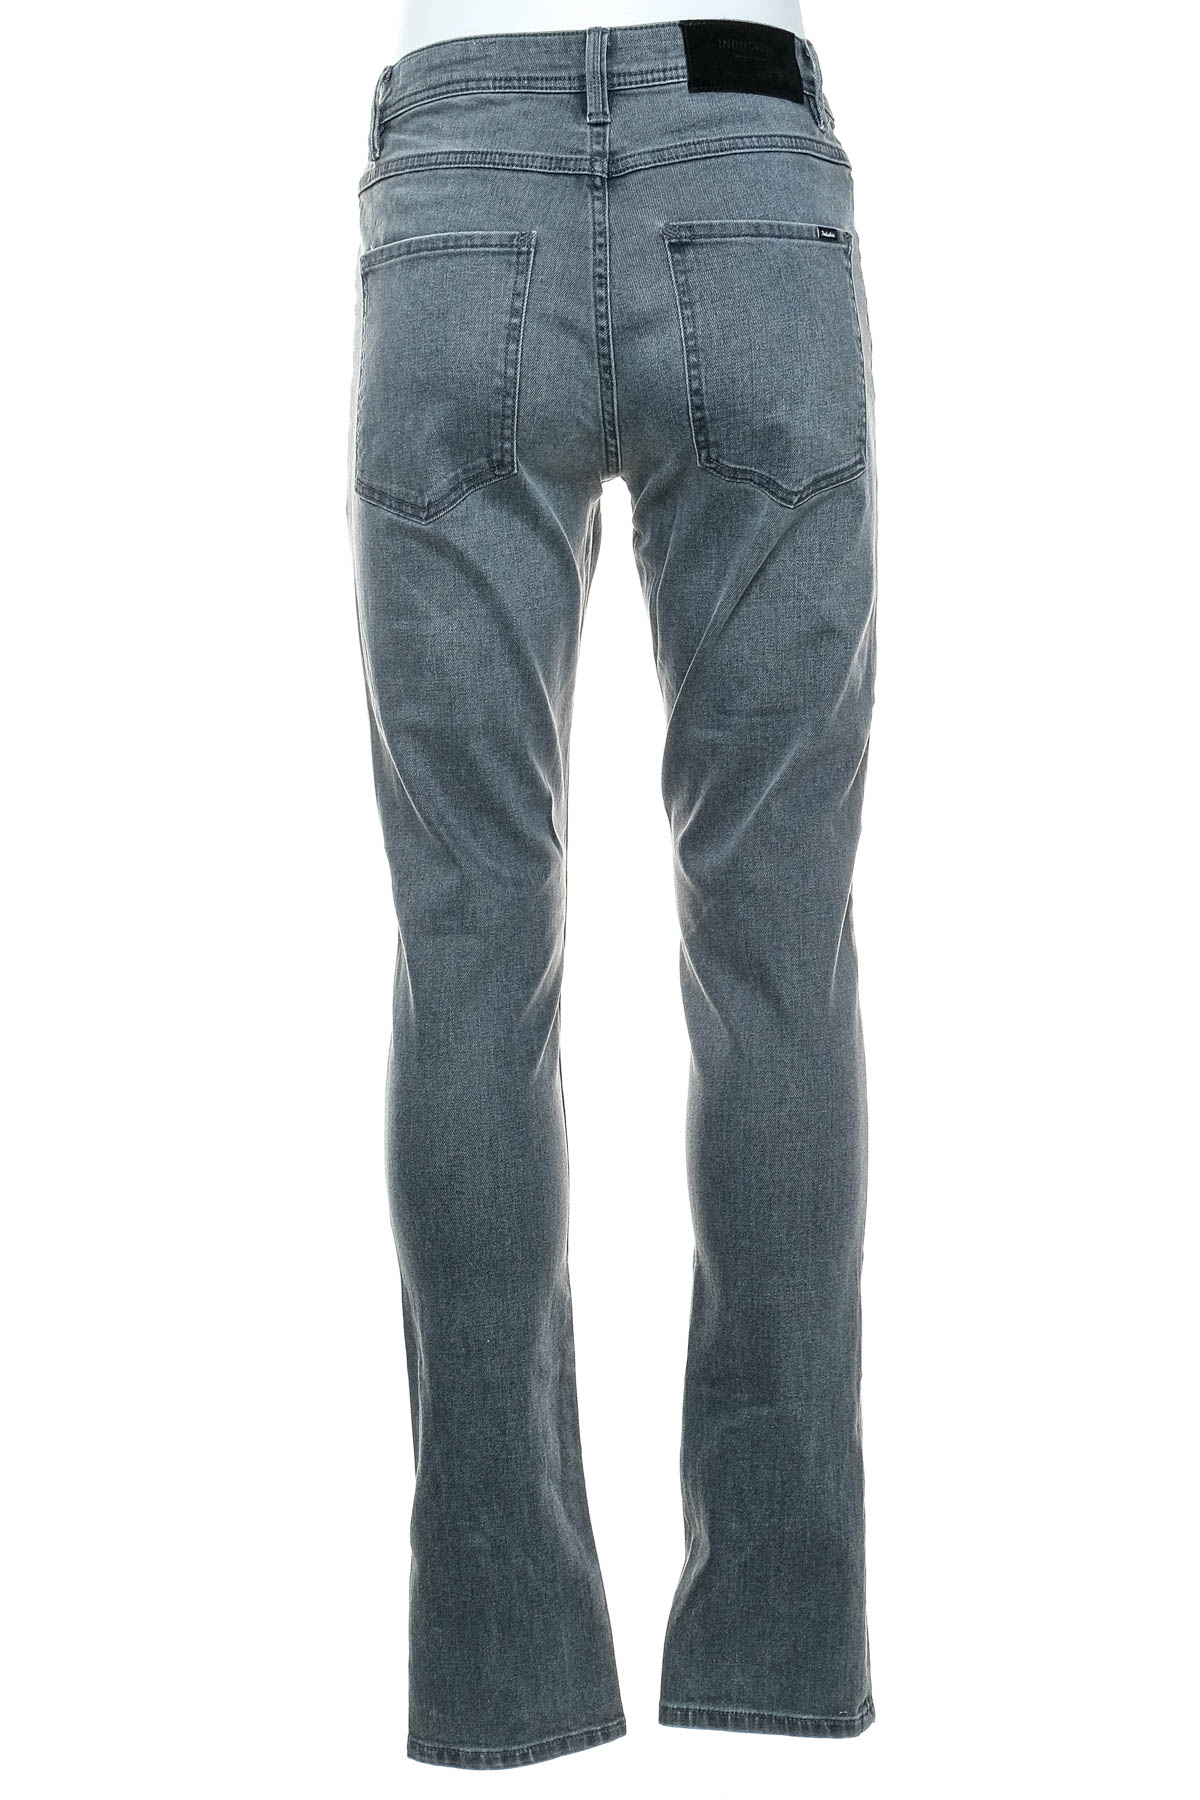 Men's jeans - INDUSTRIE - 1